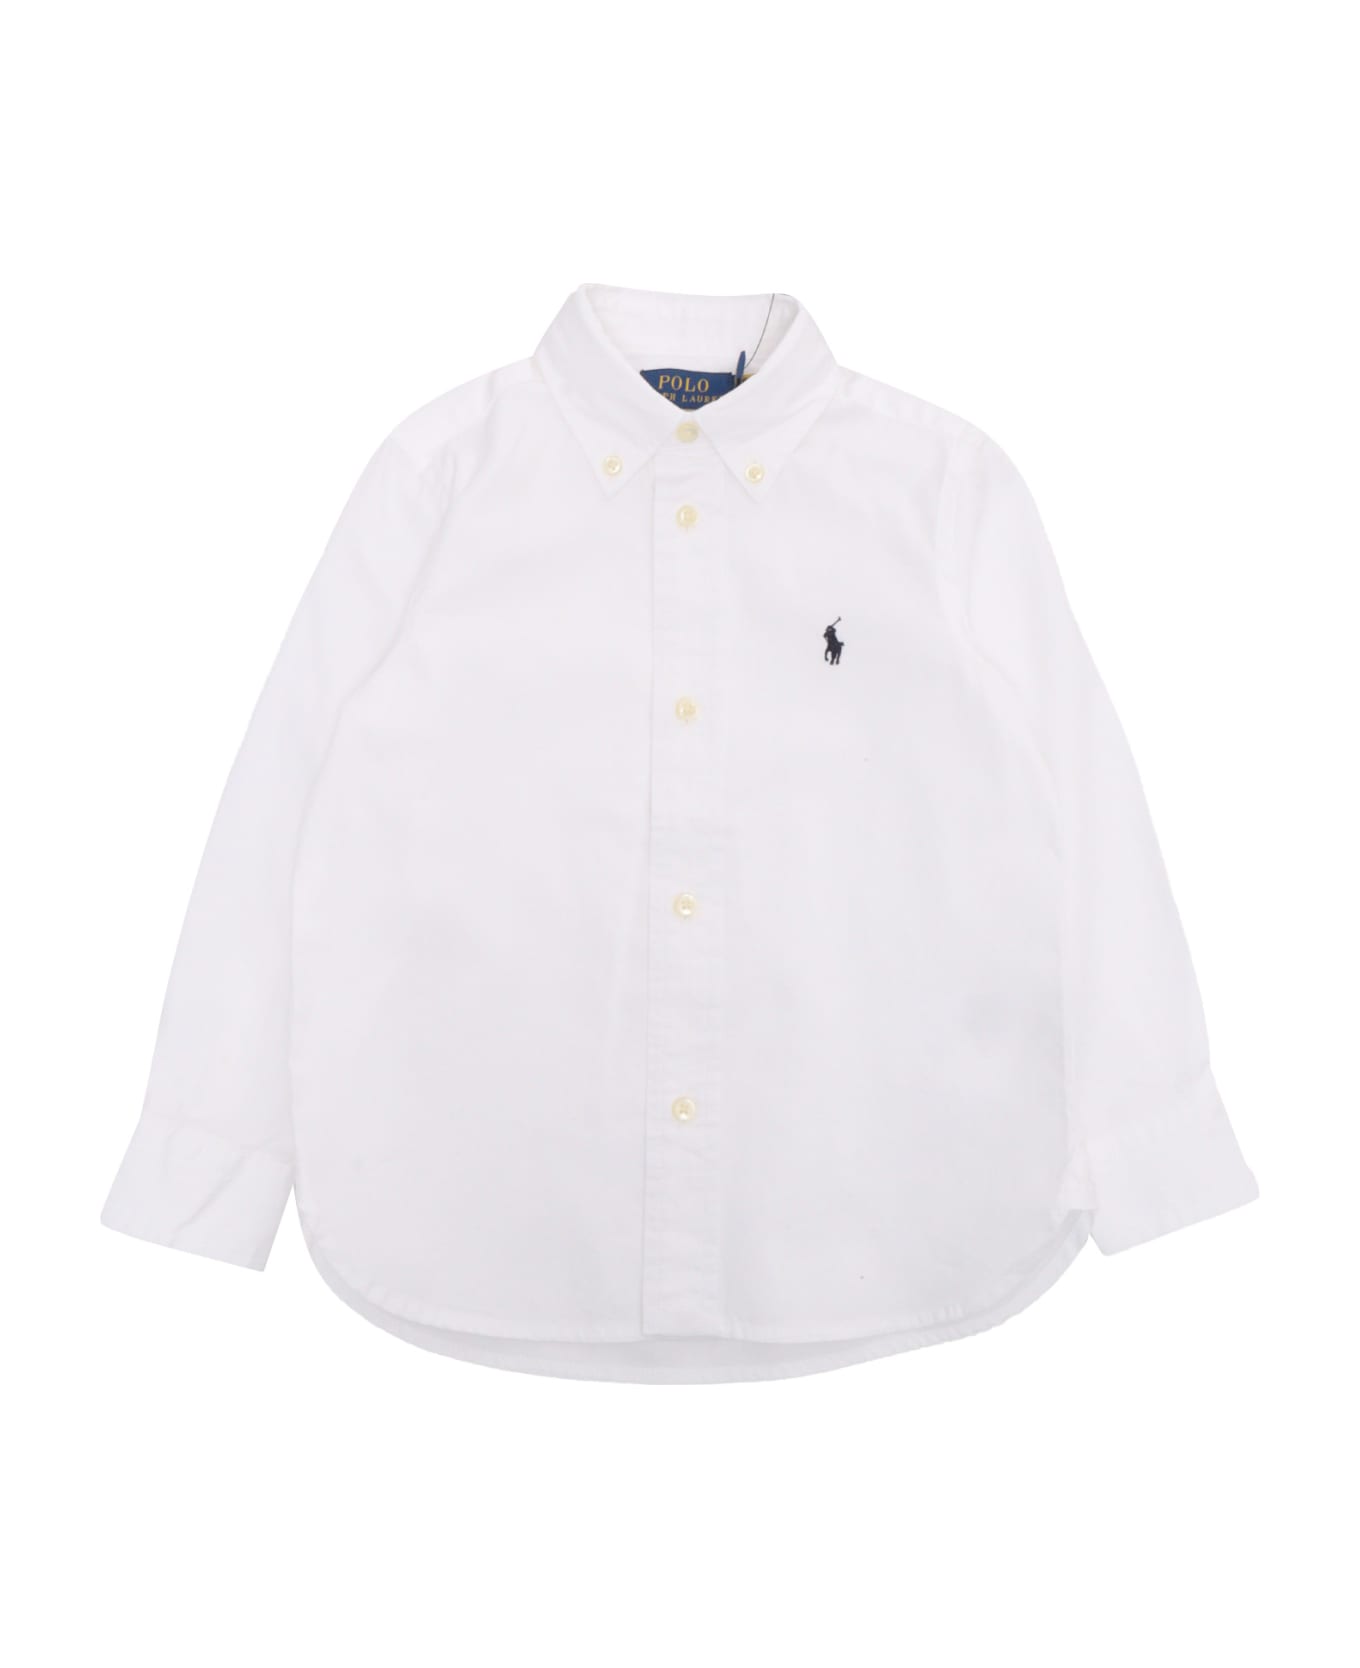 Polo Ralph Lauren White Shirt With Logo - WHITE